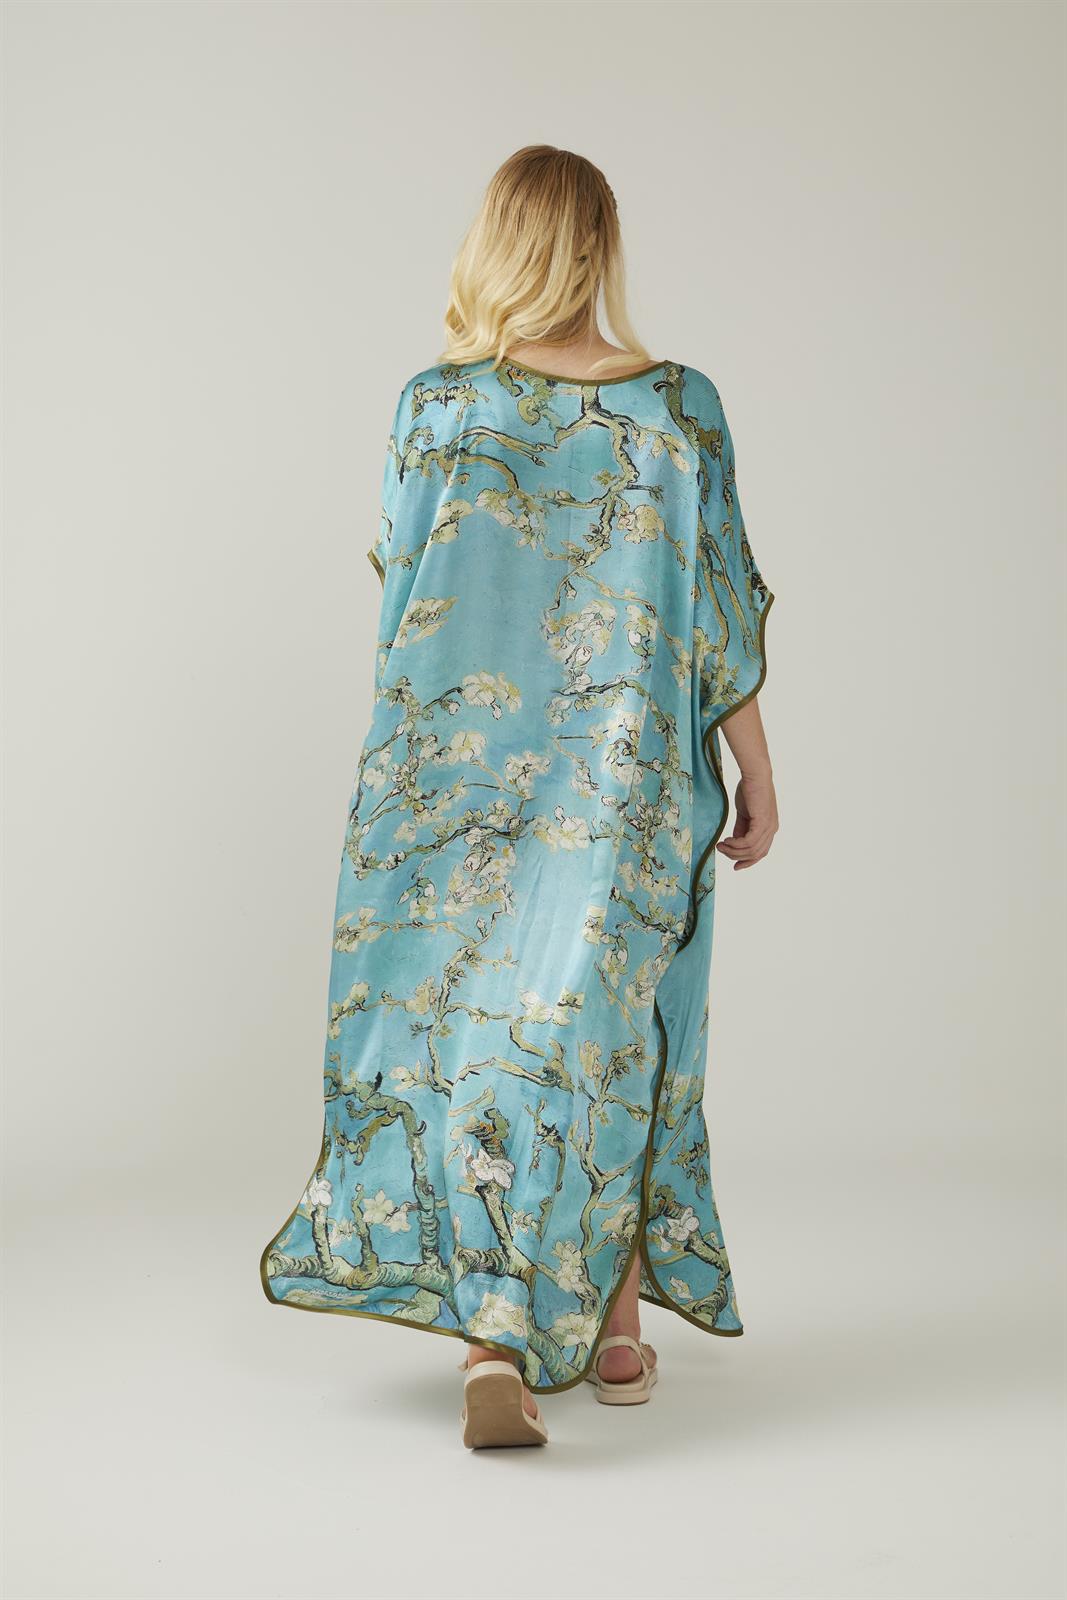 Ikigai The City Turquoise Van Gogh Almond Blossoms Patterned Satin Silk Dress / Kaftan